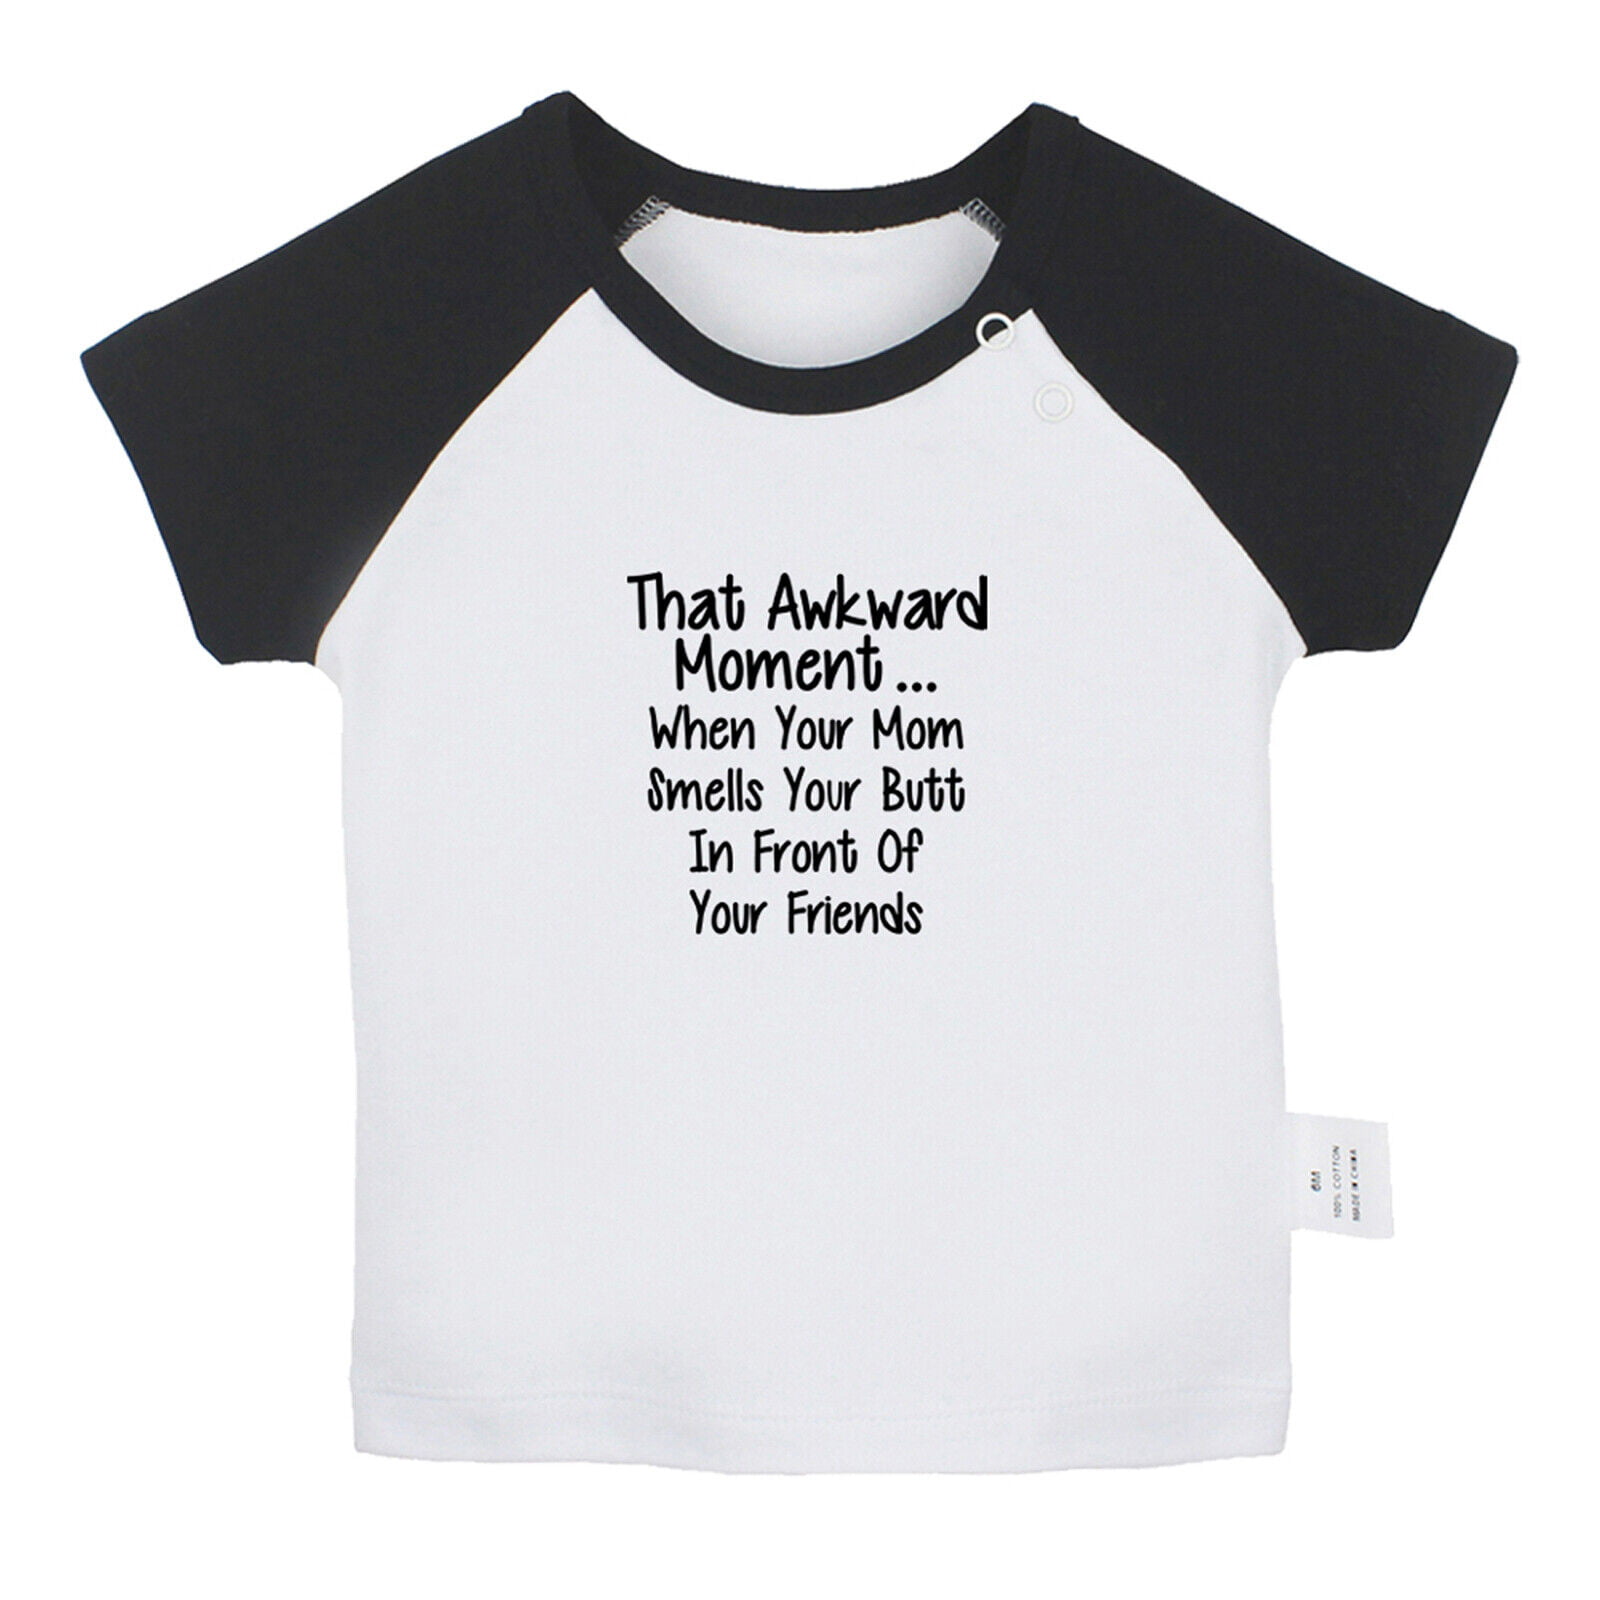 That Awkward Moment Funny T shirt For Baby, Newborn Babies T-shirts, Infant  Tops, 0-24M Kids Graphic Tees Clothing (Short Black Raglan T-shirt, 0-6  Months) 